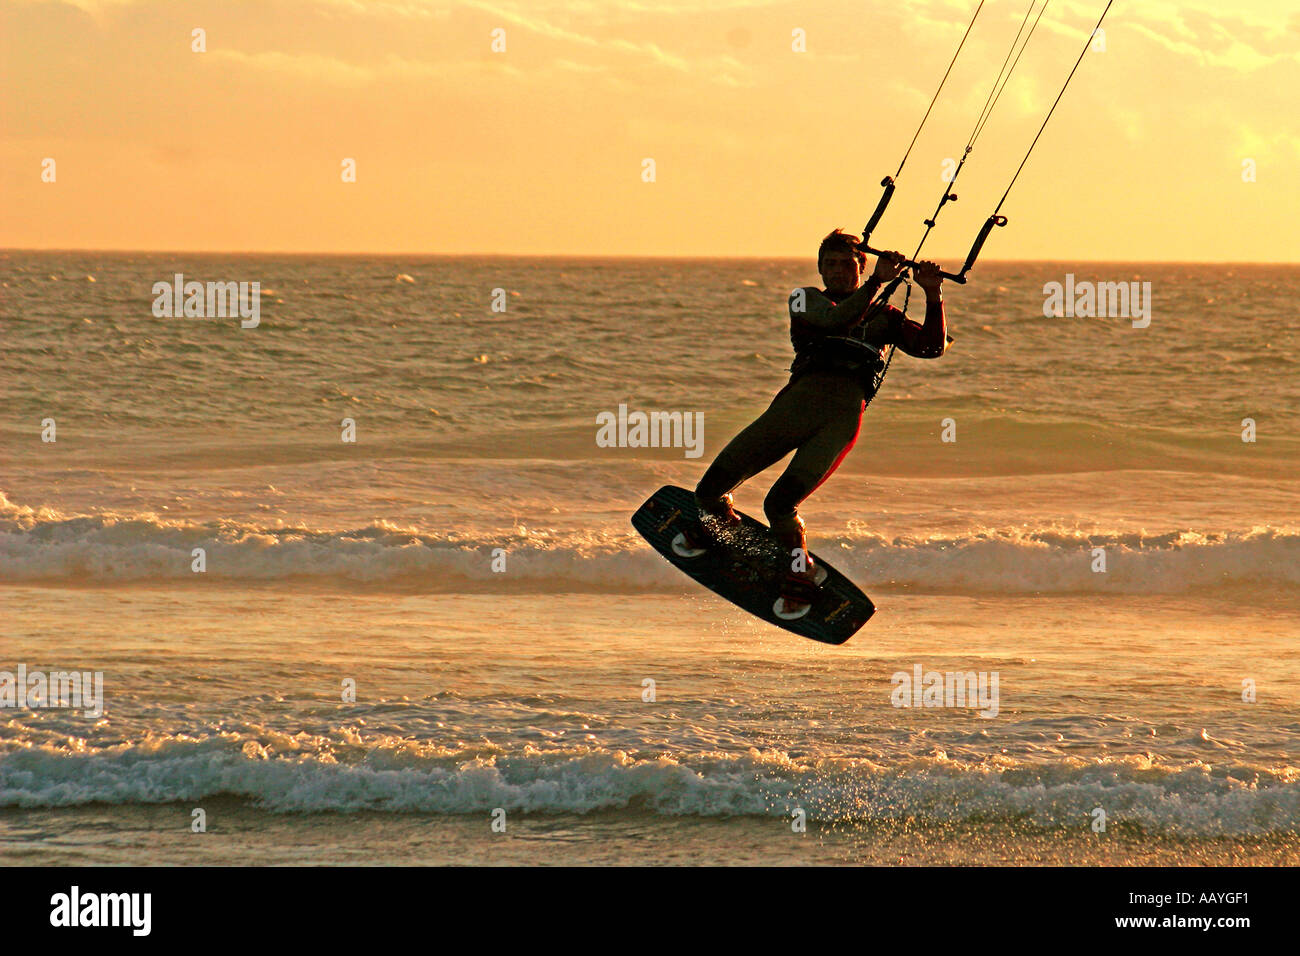 Sud Africa cape town blouberg beach kite surfer Foto Stock